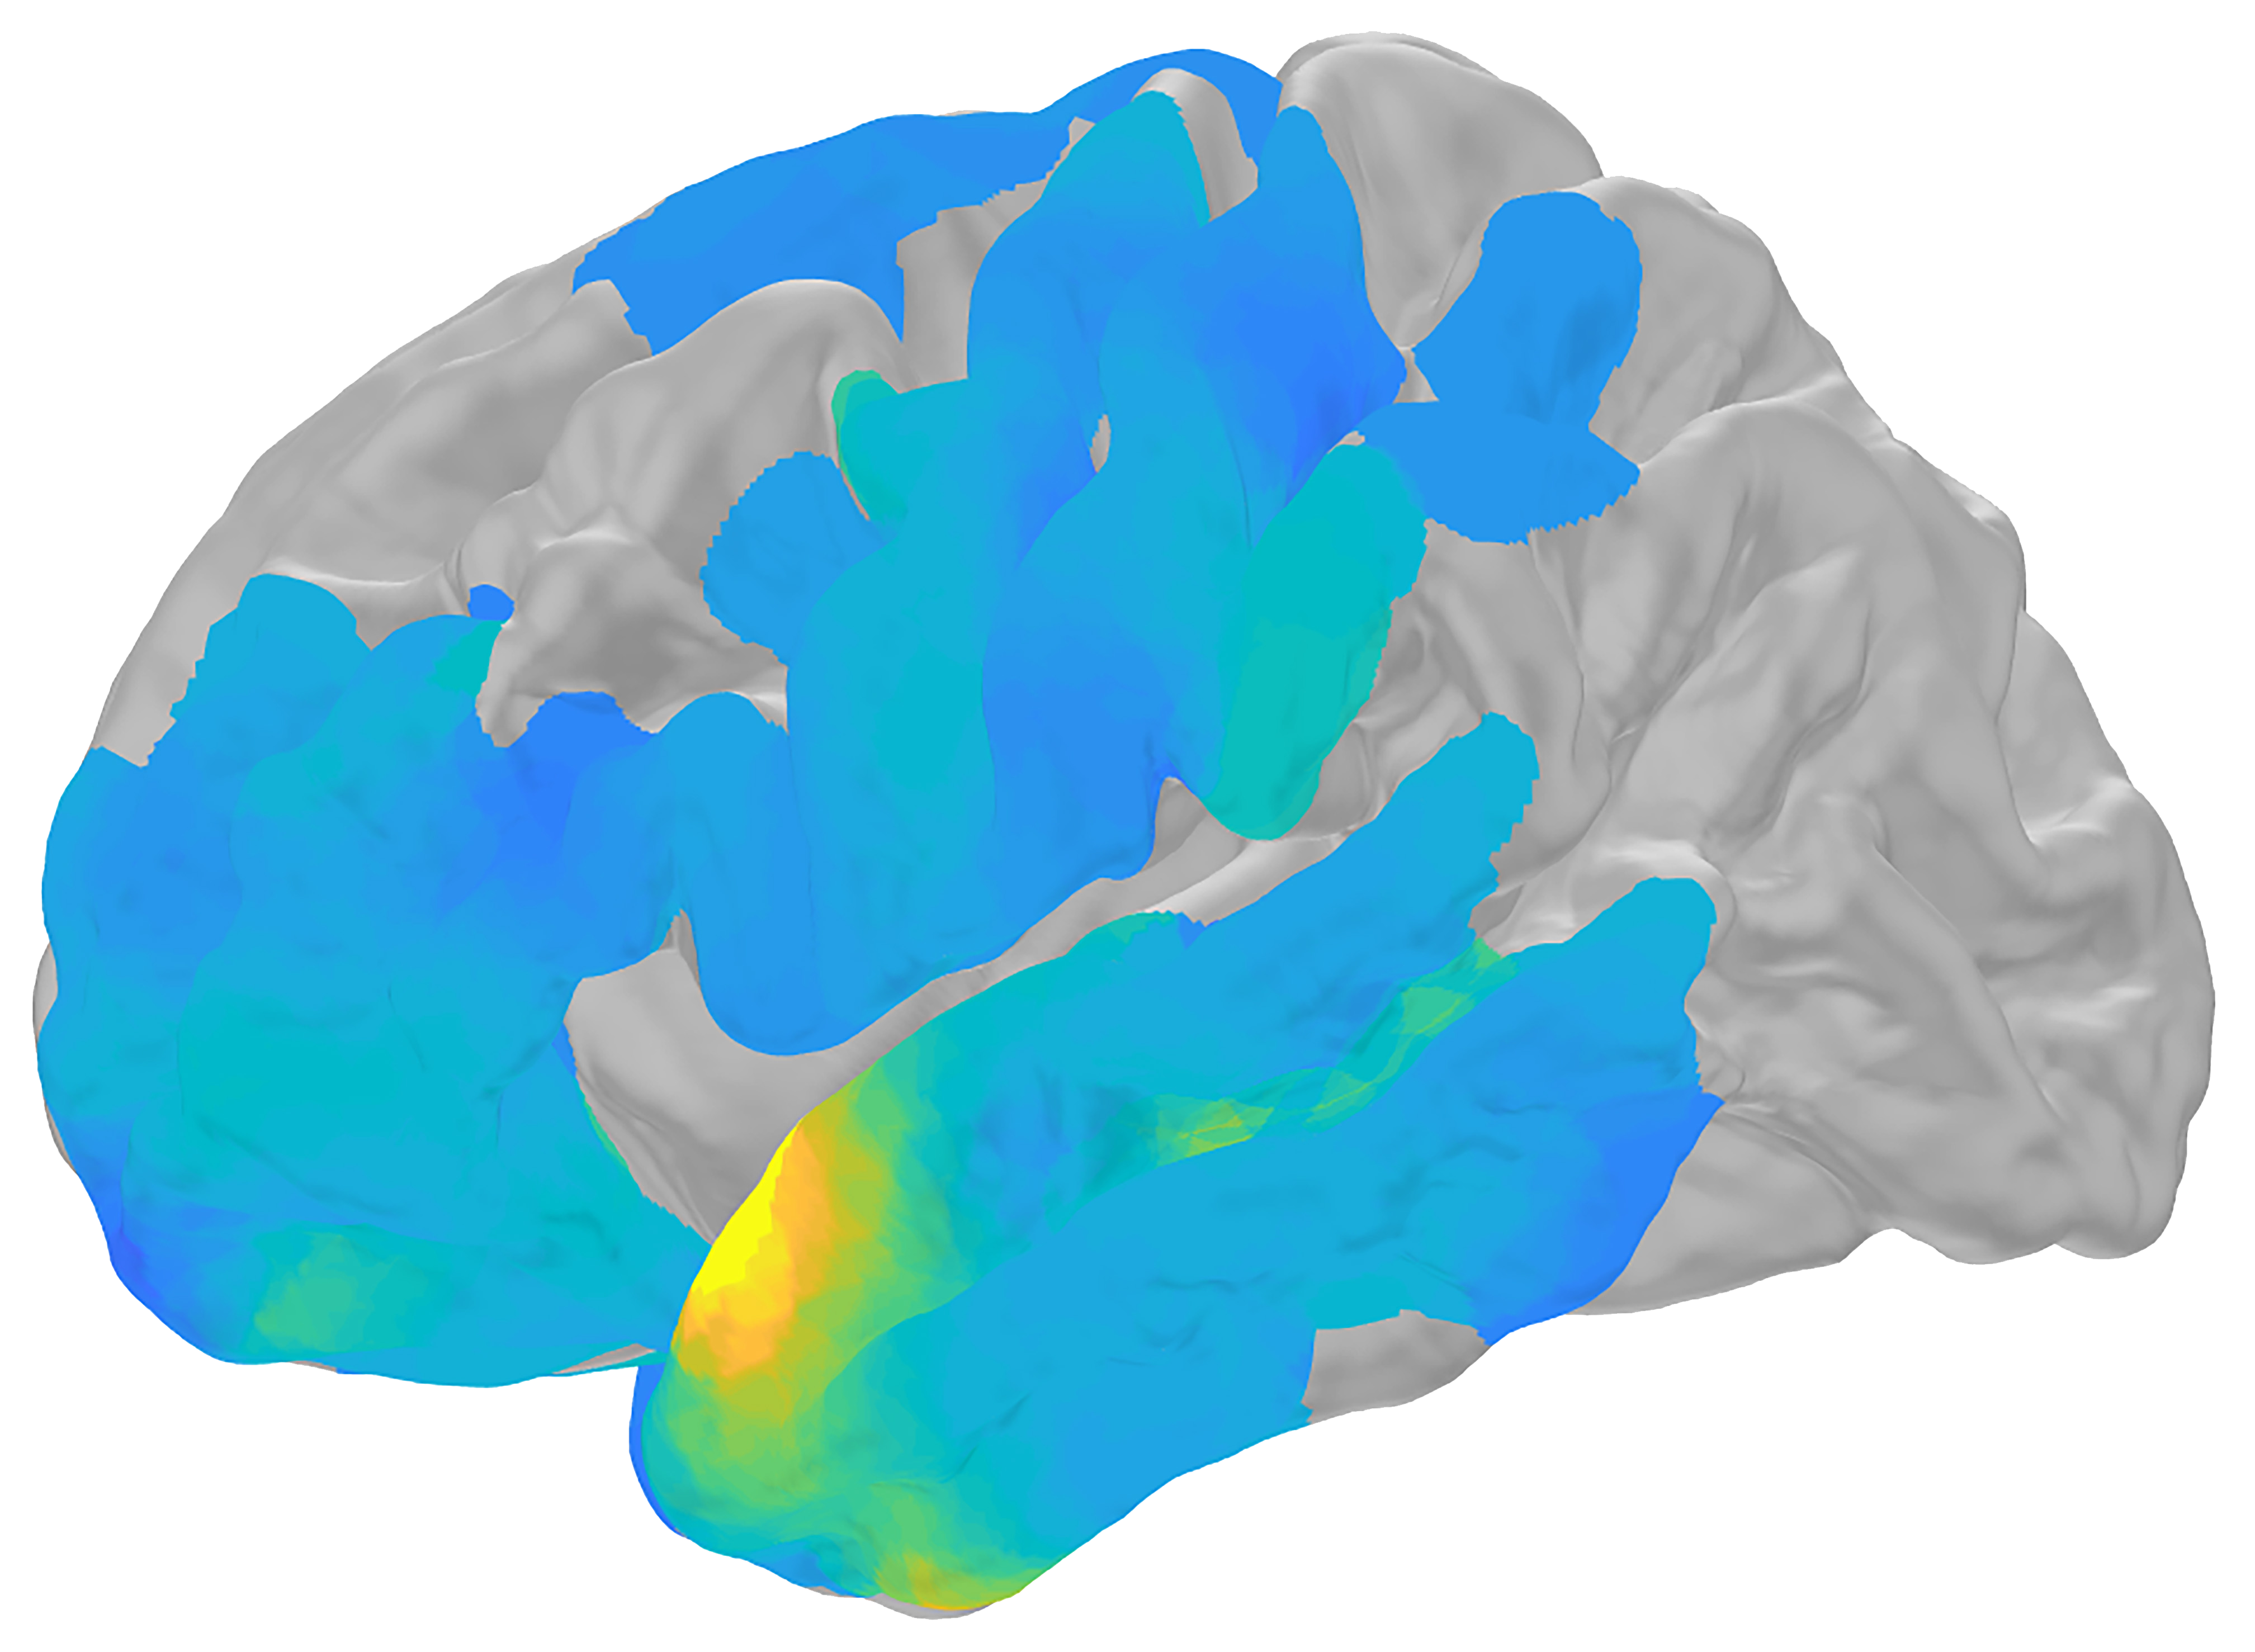 Computer-generated brain scan.